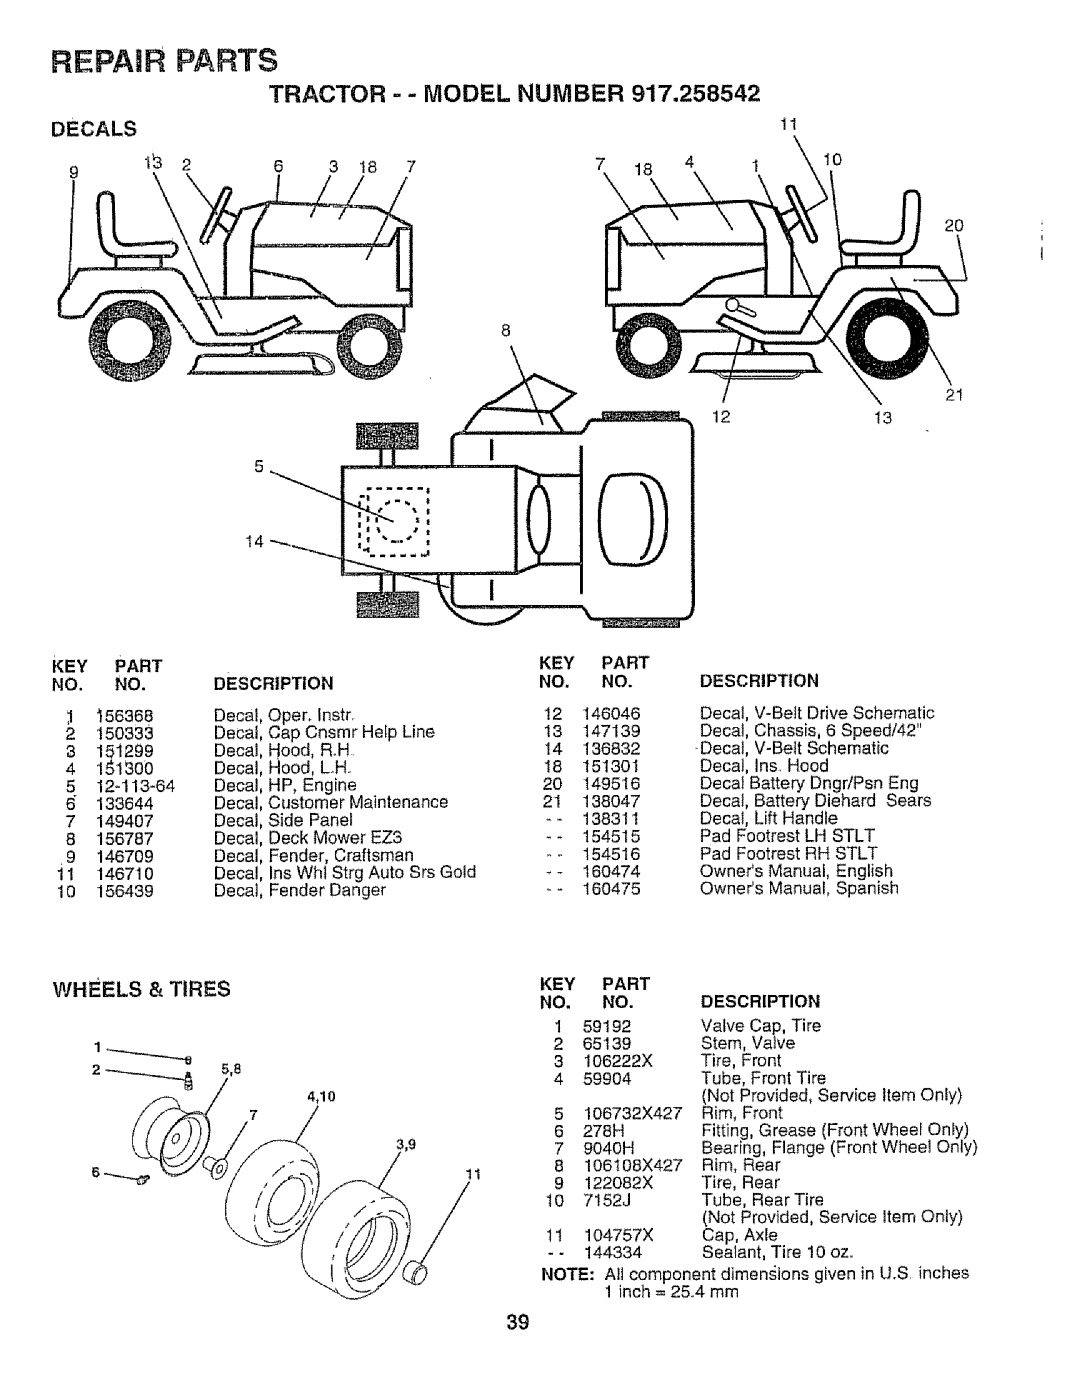 Sears 917.258542 owner manual Repair, Parts, Decals, 151300, Wheels & Tires, Description 